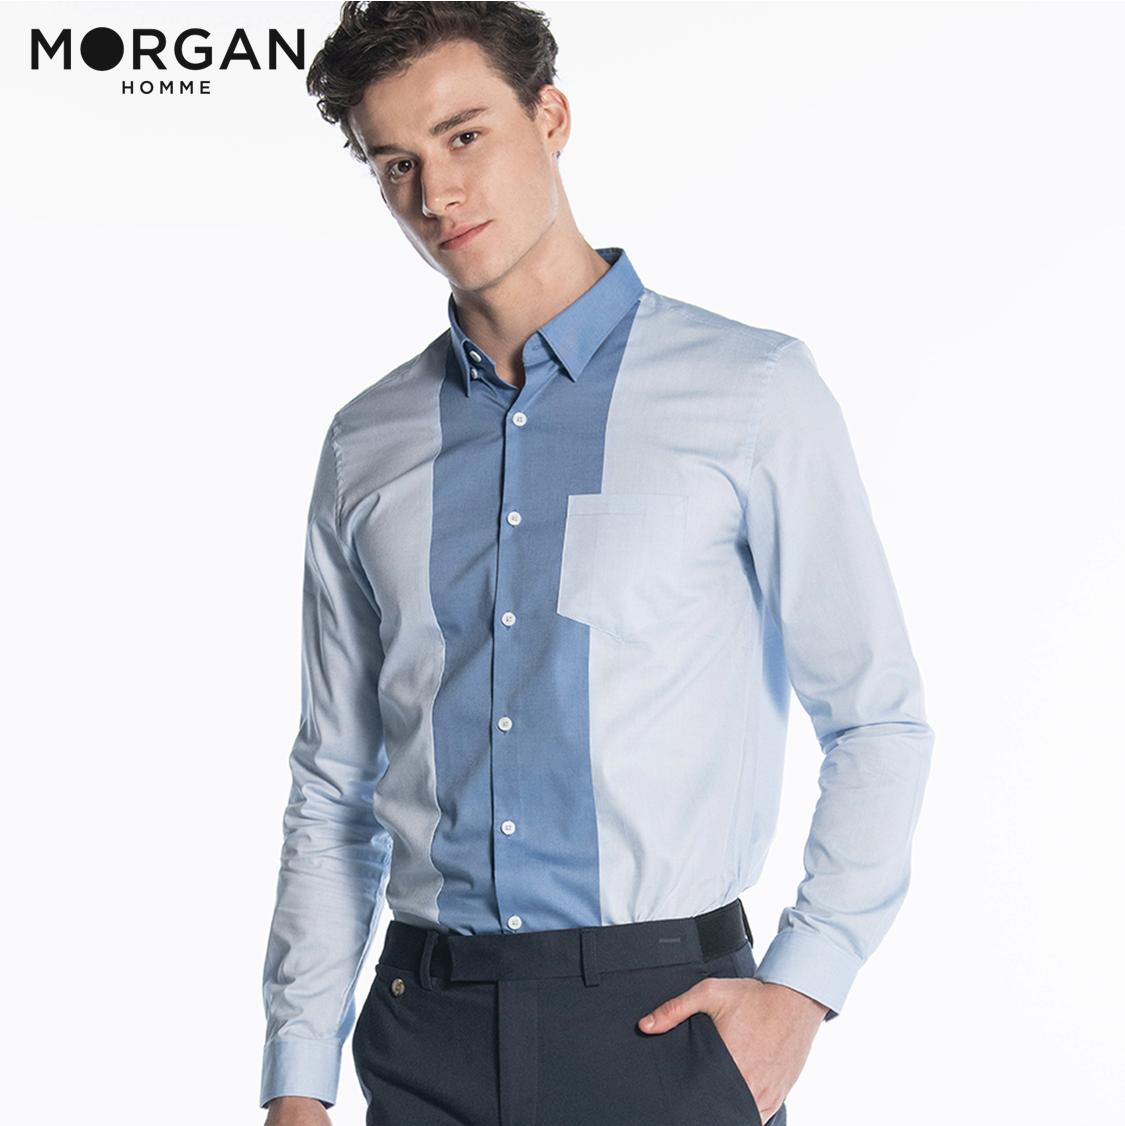 Morgan Homme เสื้อเชิ้ตแขนยาว เสื้อเชิ้ตทำงาน สีฟ้าทูโทน ดีไซน์ไม่เหมือนใคร รุ่น Moscow